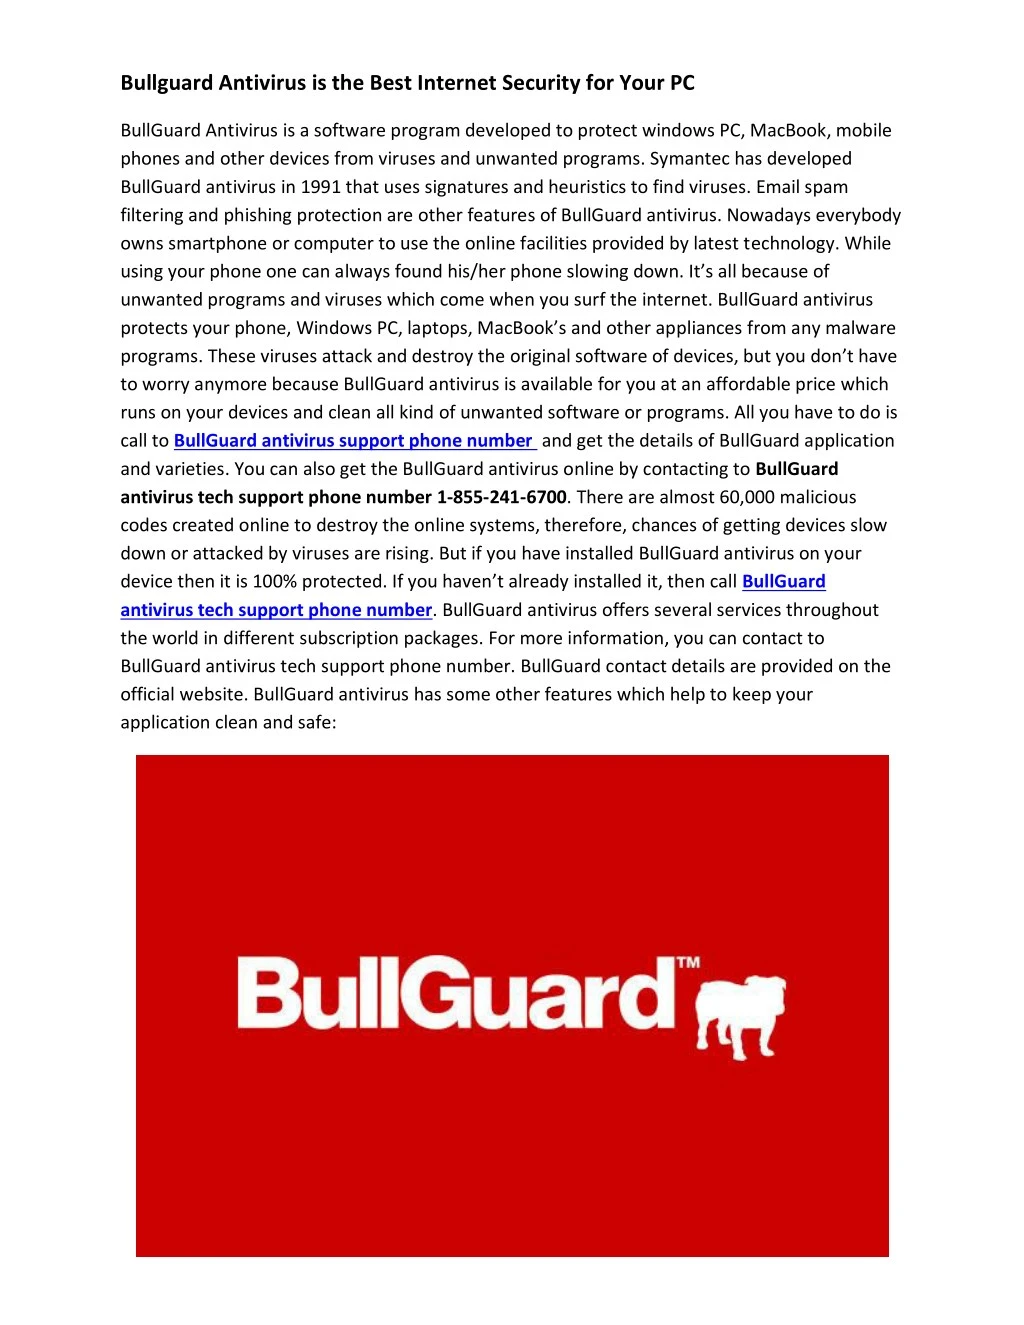 bullguard antivirus is the best internet security